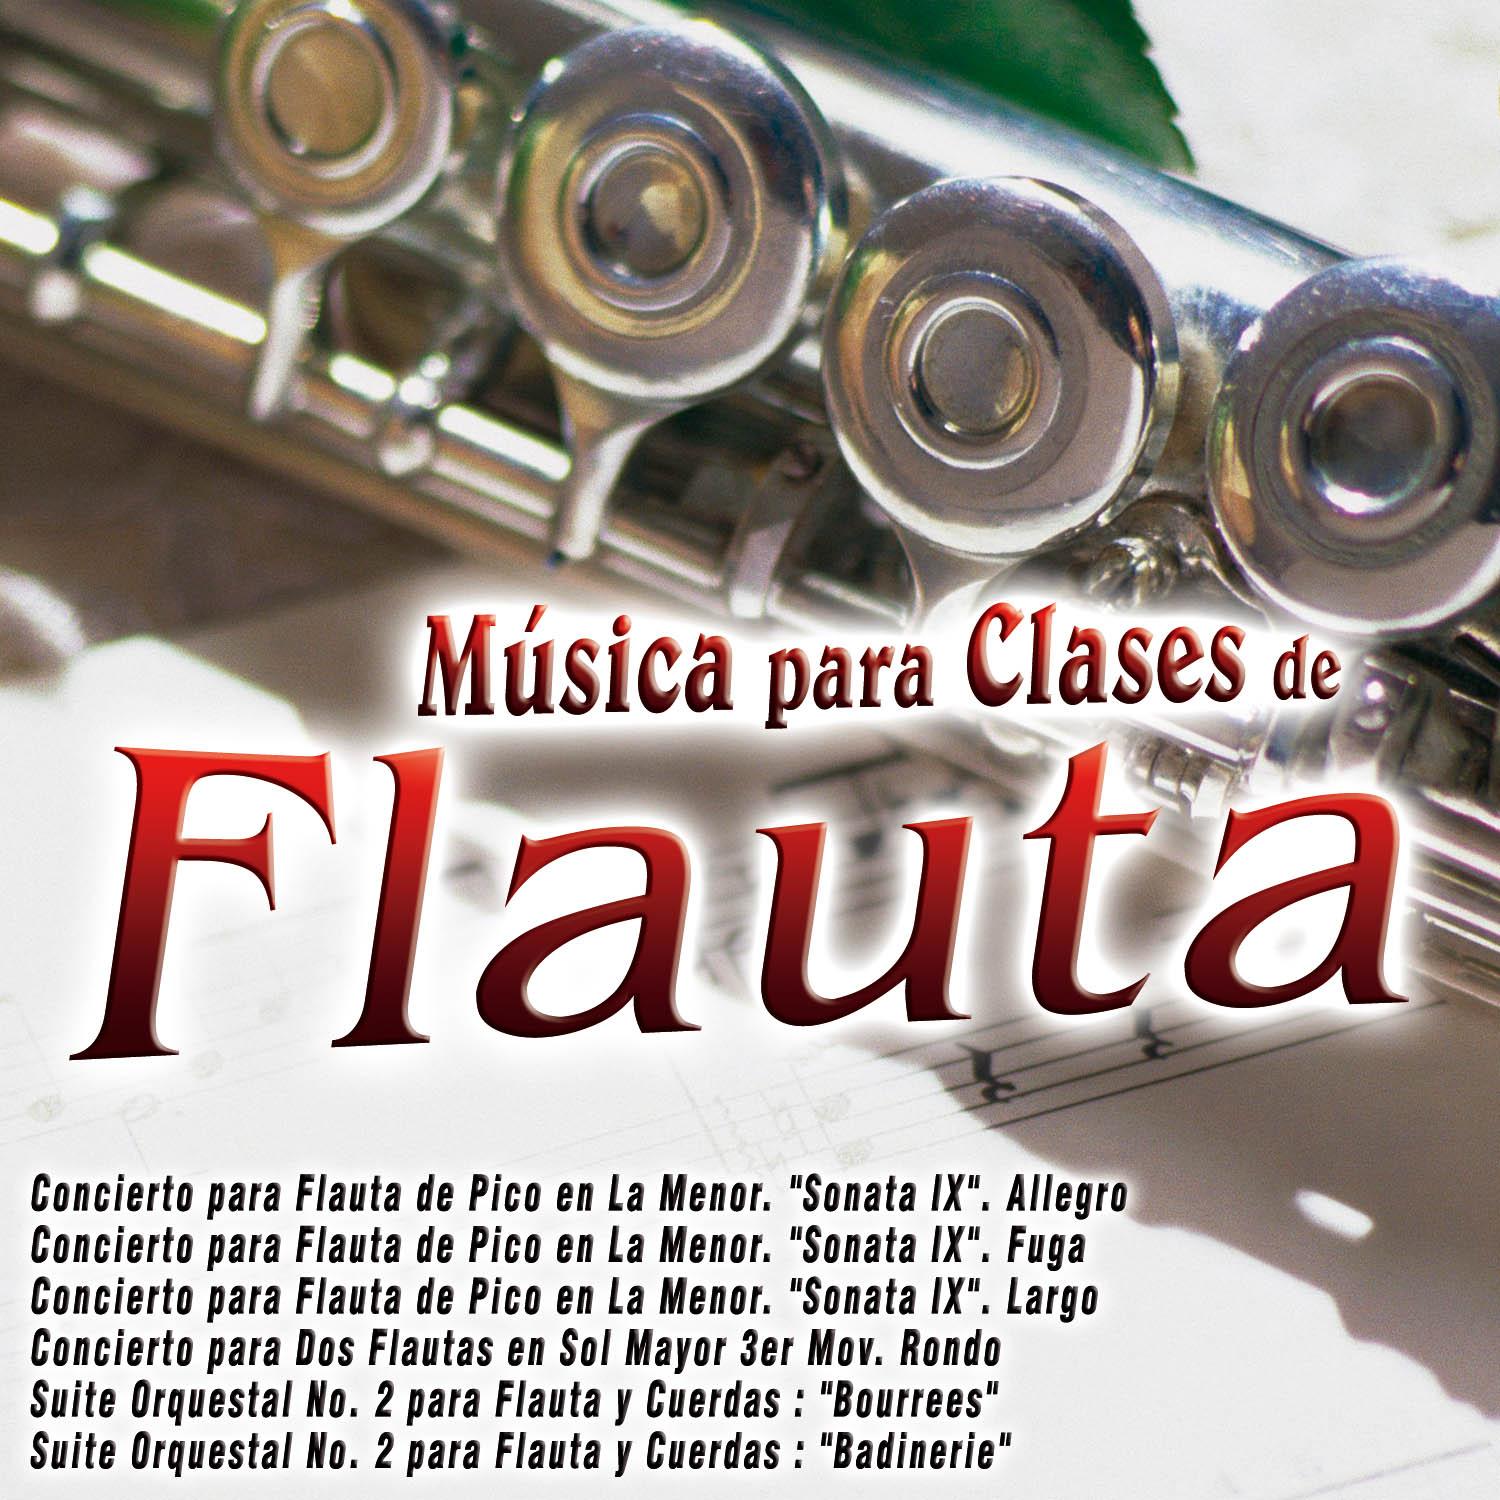 Concierto para Flauta de Pico en La Menor. "Sonata IX". Allegro